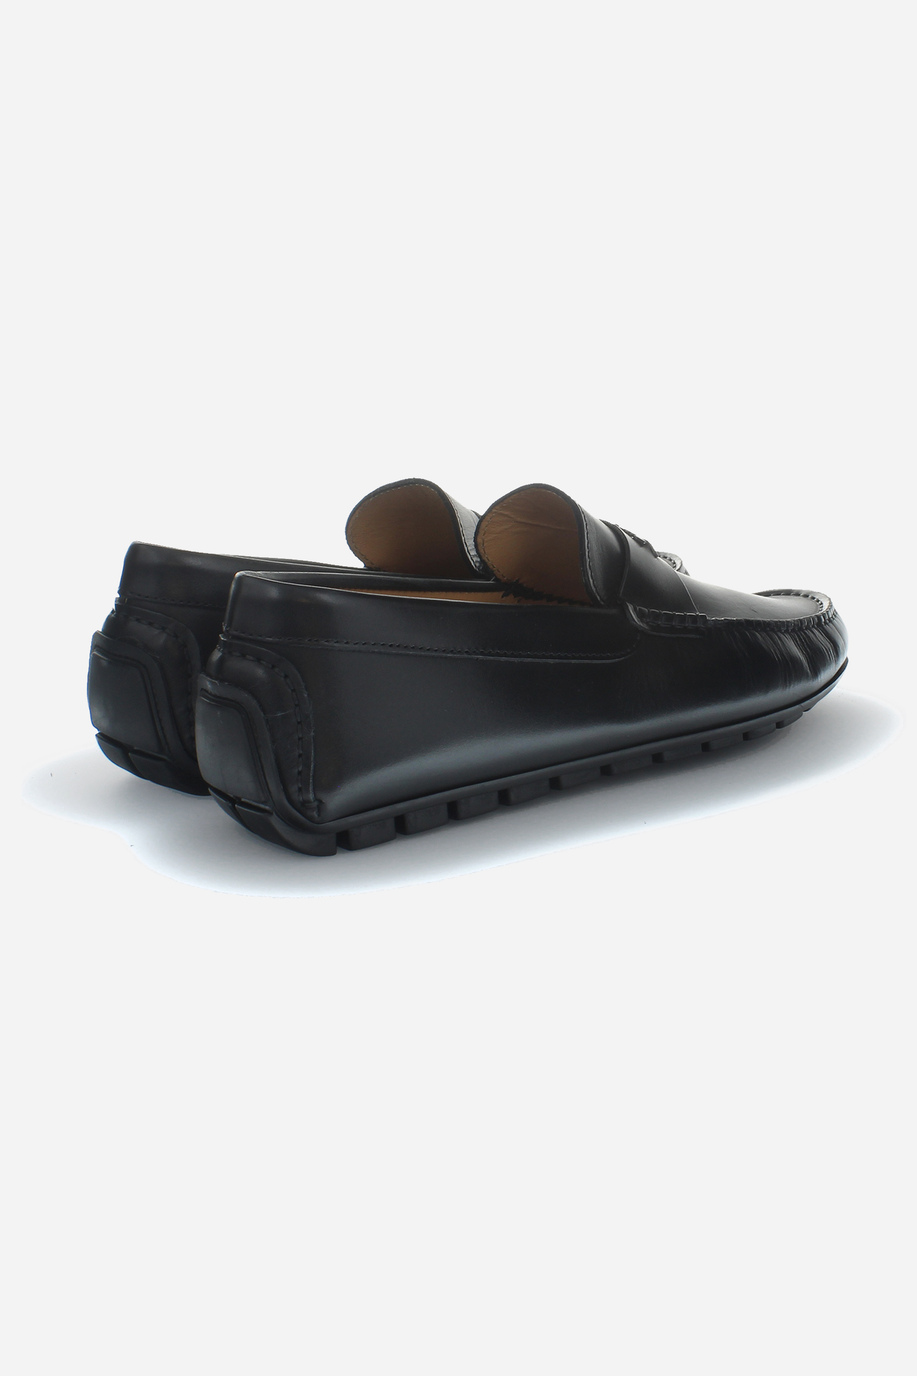 Mokassin aus Kalbsleder - Elegante Schuhe | La Martina - Official Online Shop